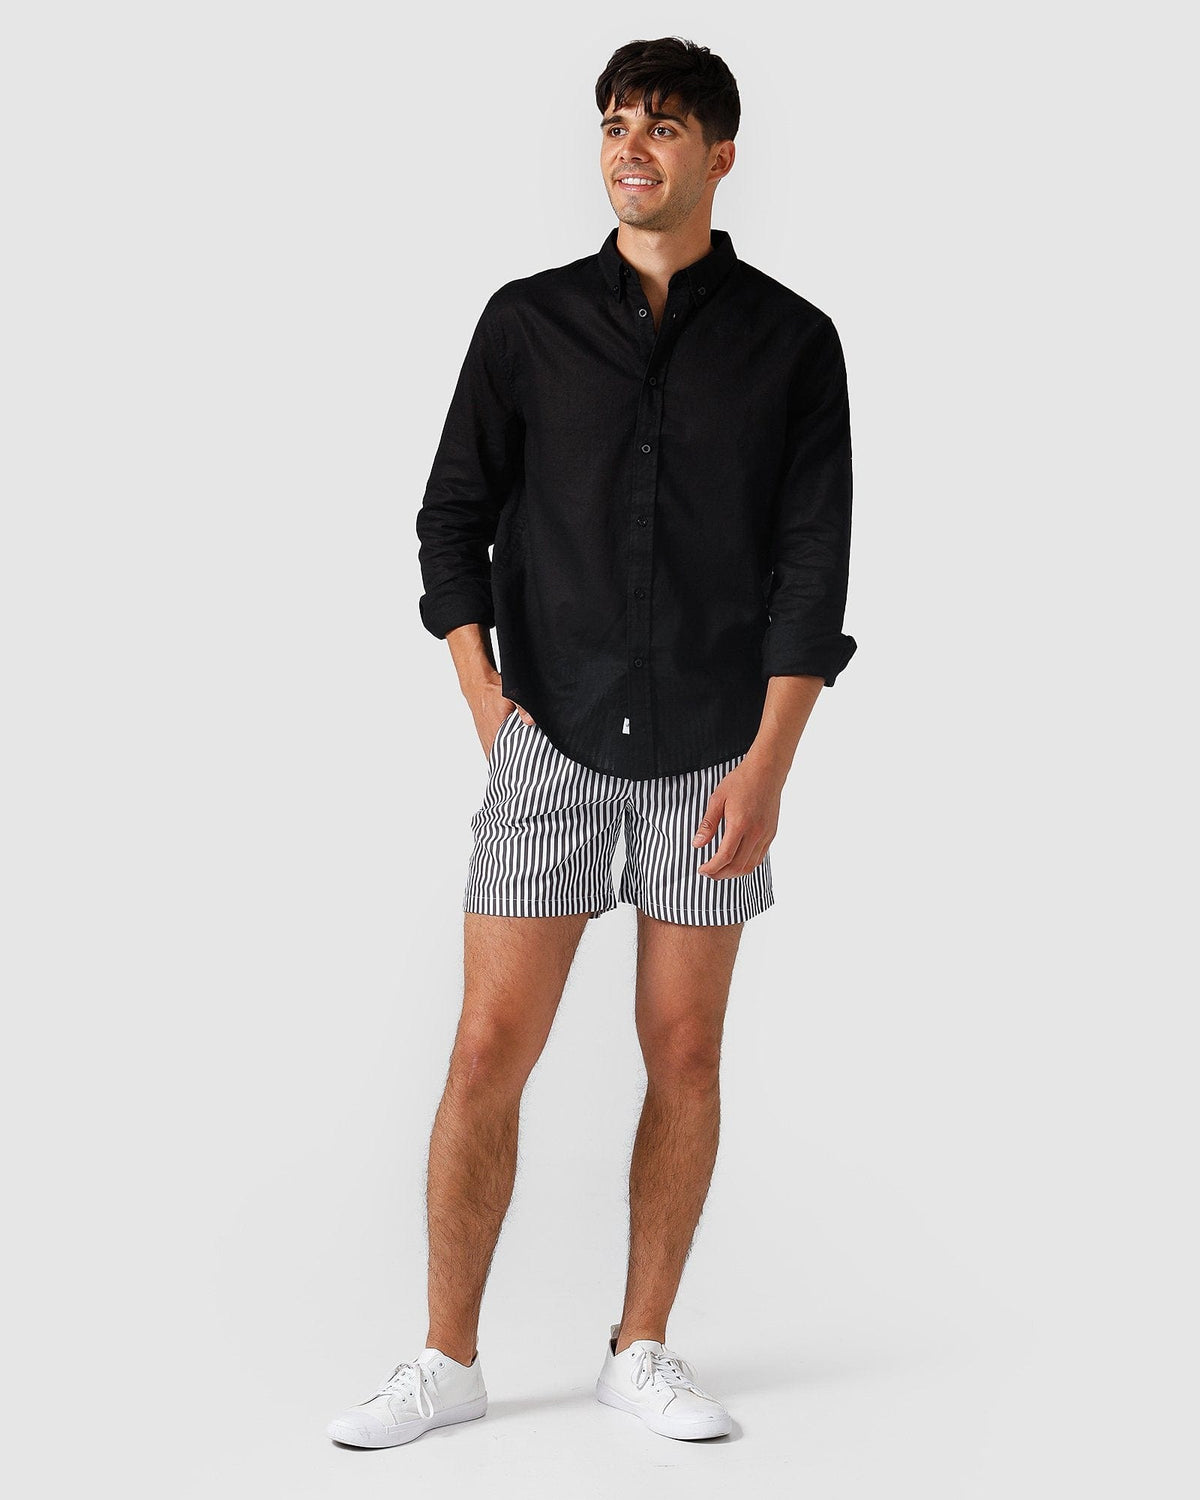 Linen Shirt - Black* - Vacay Swimwear - Splash Swimwear  - mens, mens clothing, mens shirts, vacay - Splash Swimwear 